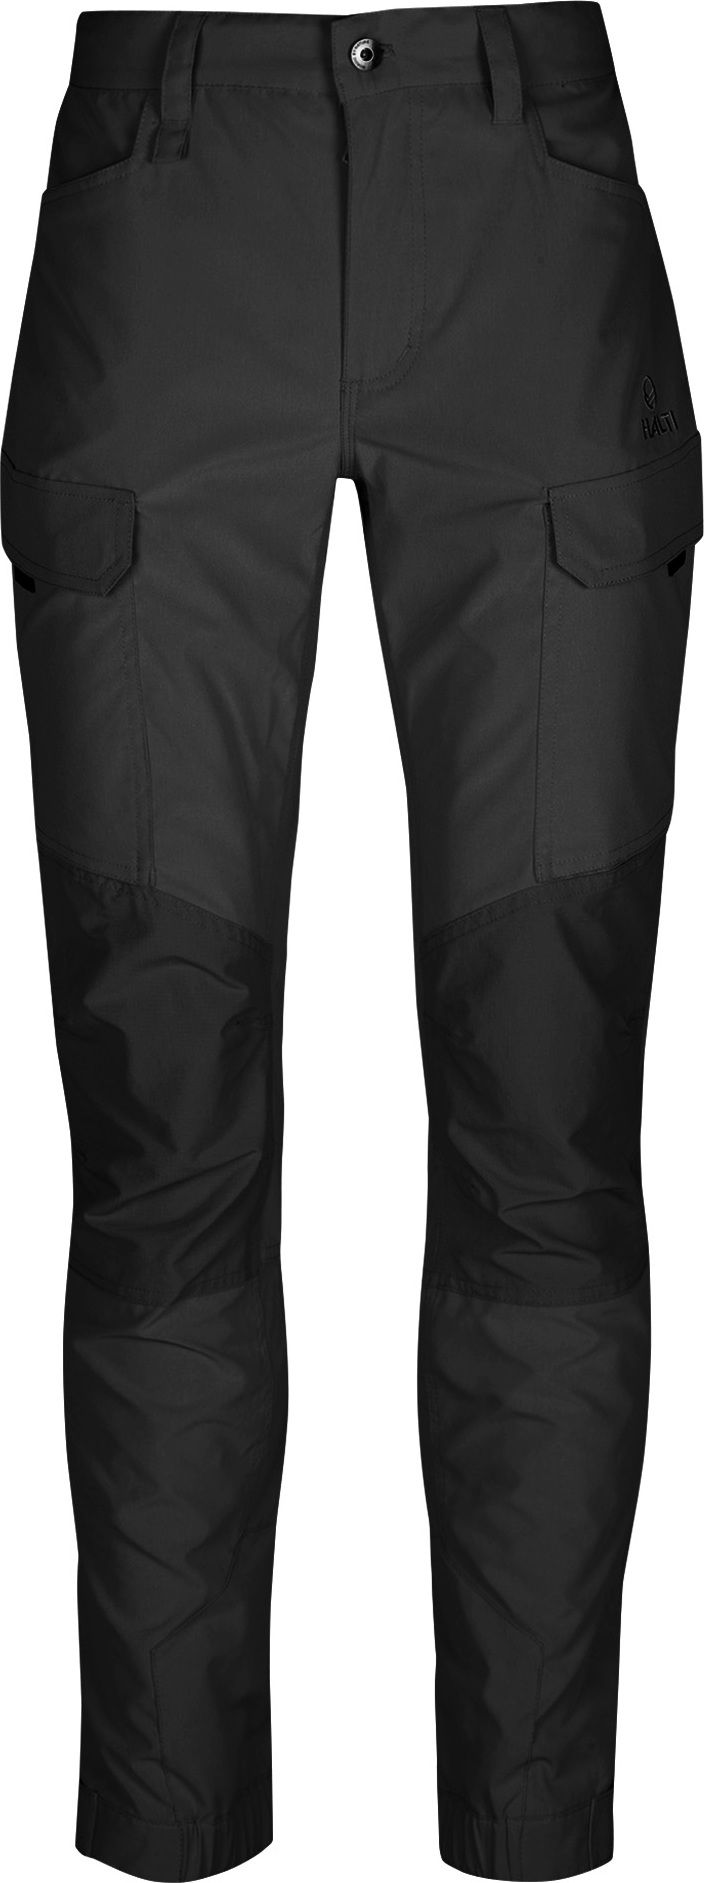 Women's Hiker Lite Pants Black